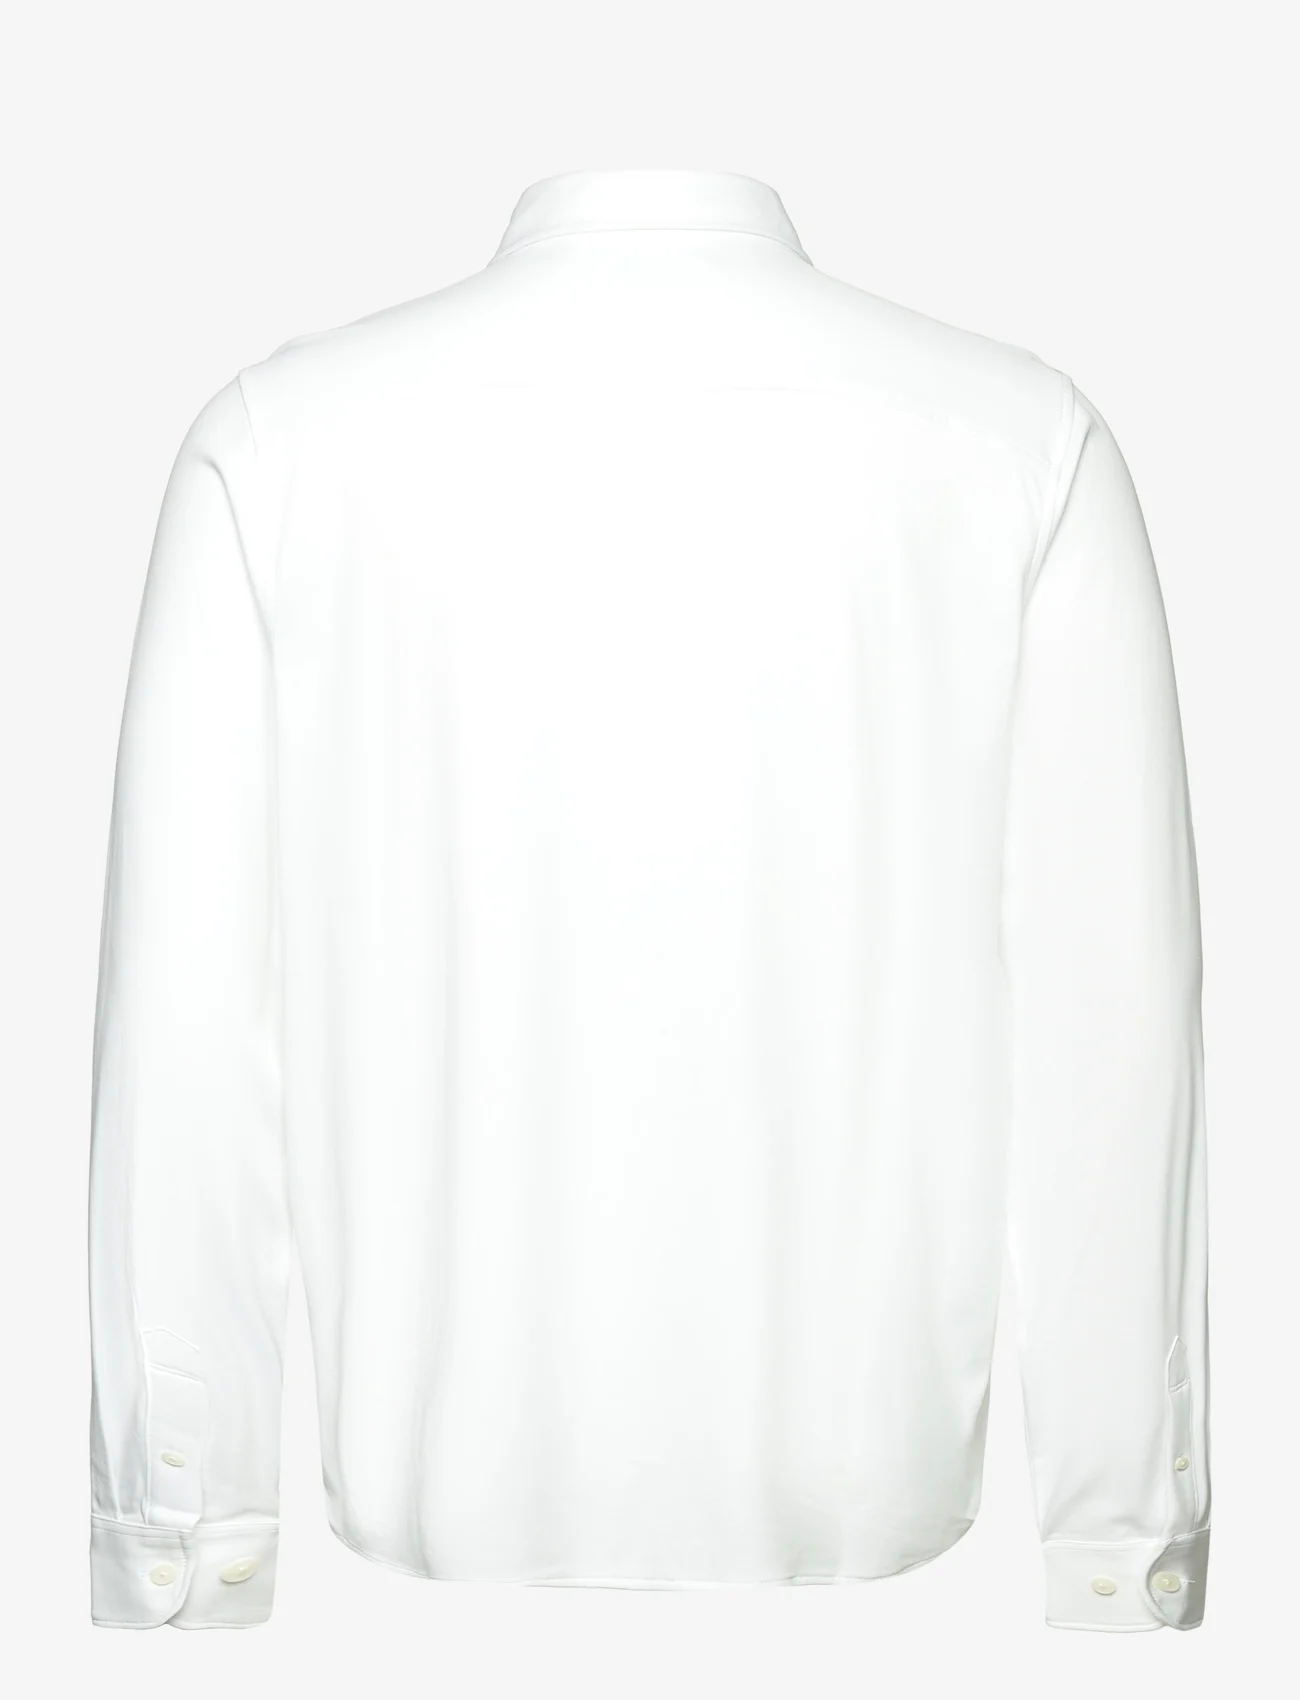 Original Penguin - LS BUTTON FRONT SHIR - podstawowe koszulki - bright white - 1